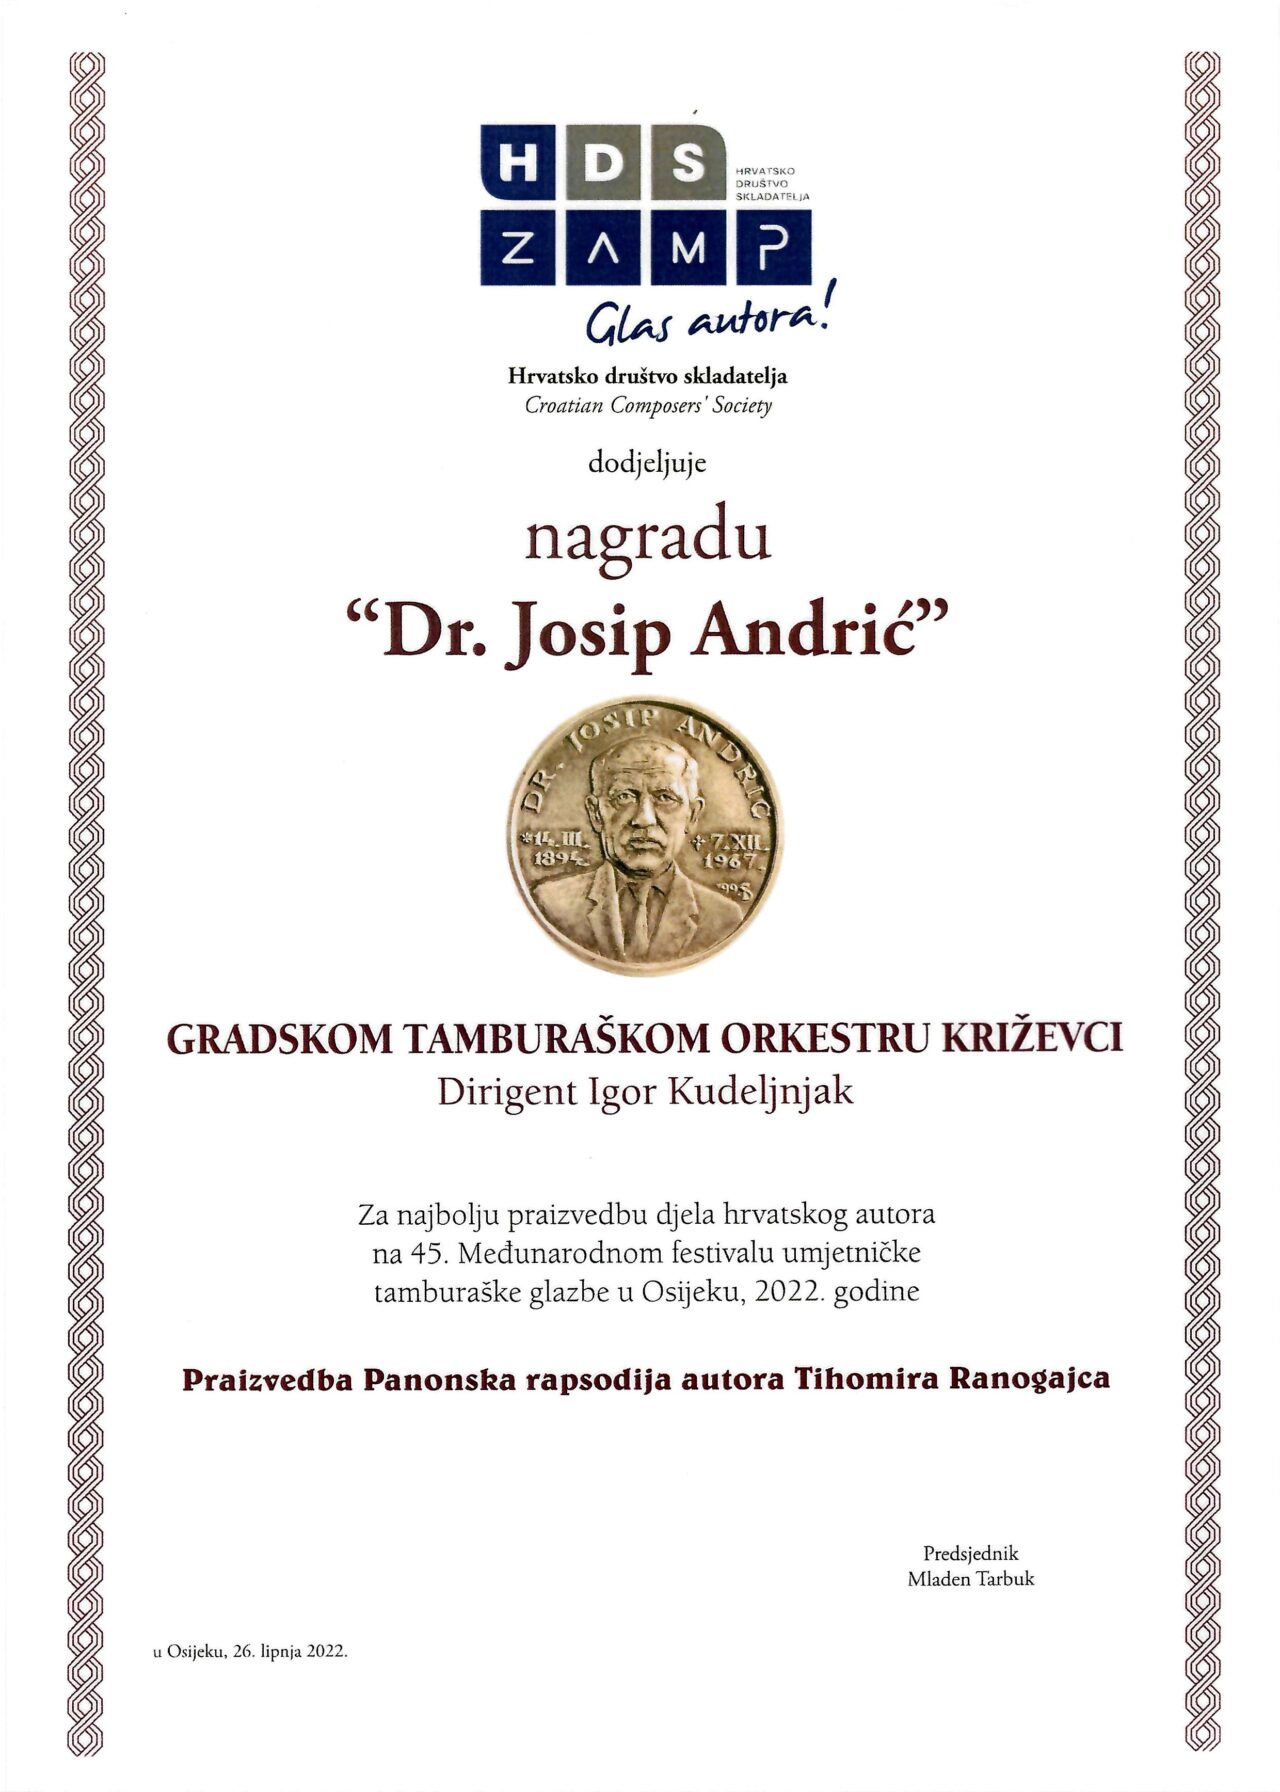 Nagrada “dr. Josip Andrić”